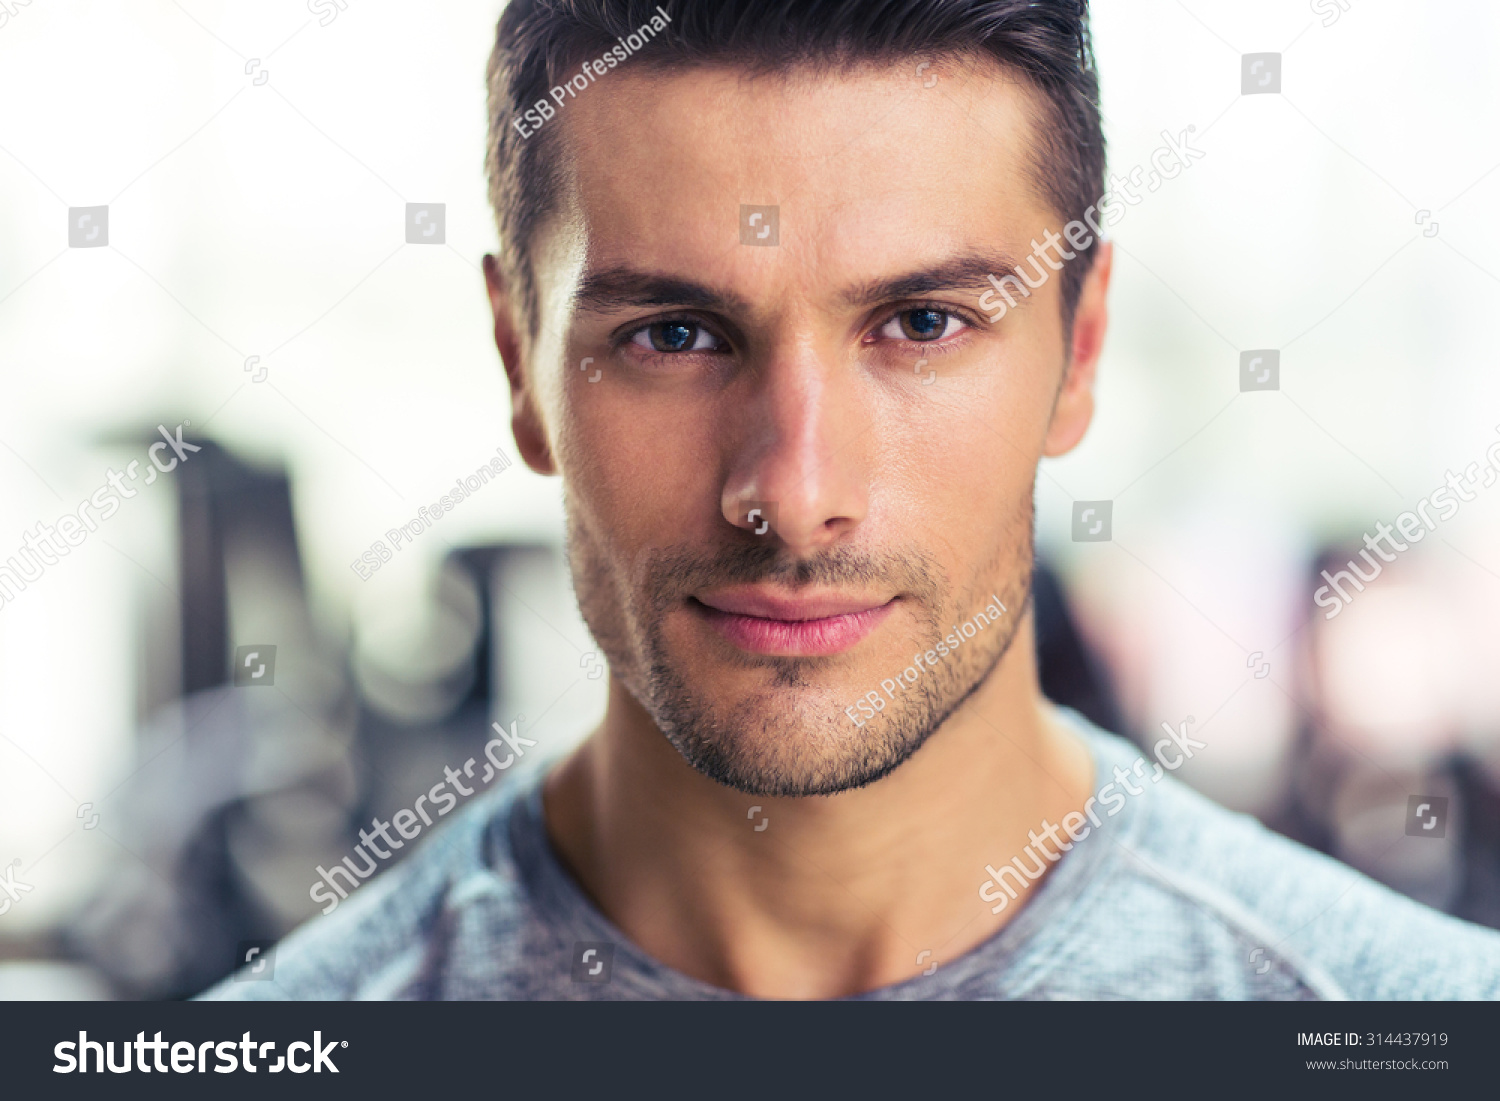 Closeup portrait of a handsome man at gym #314437919